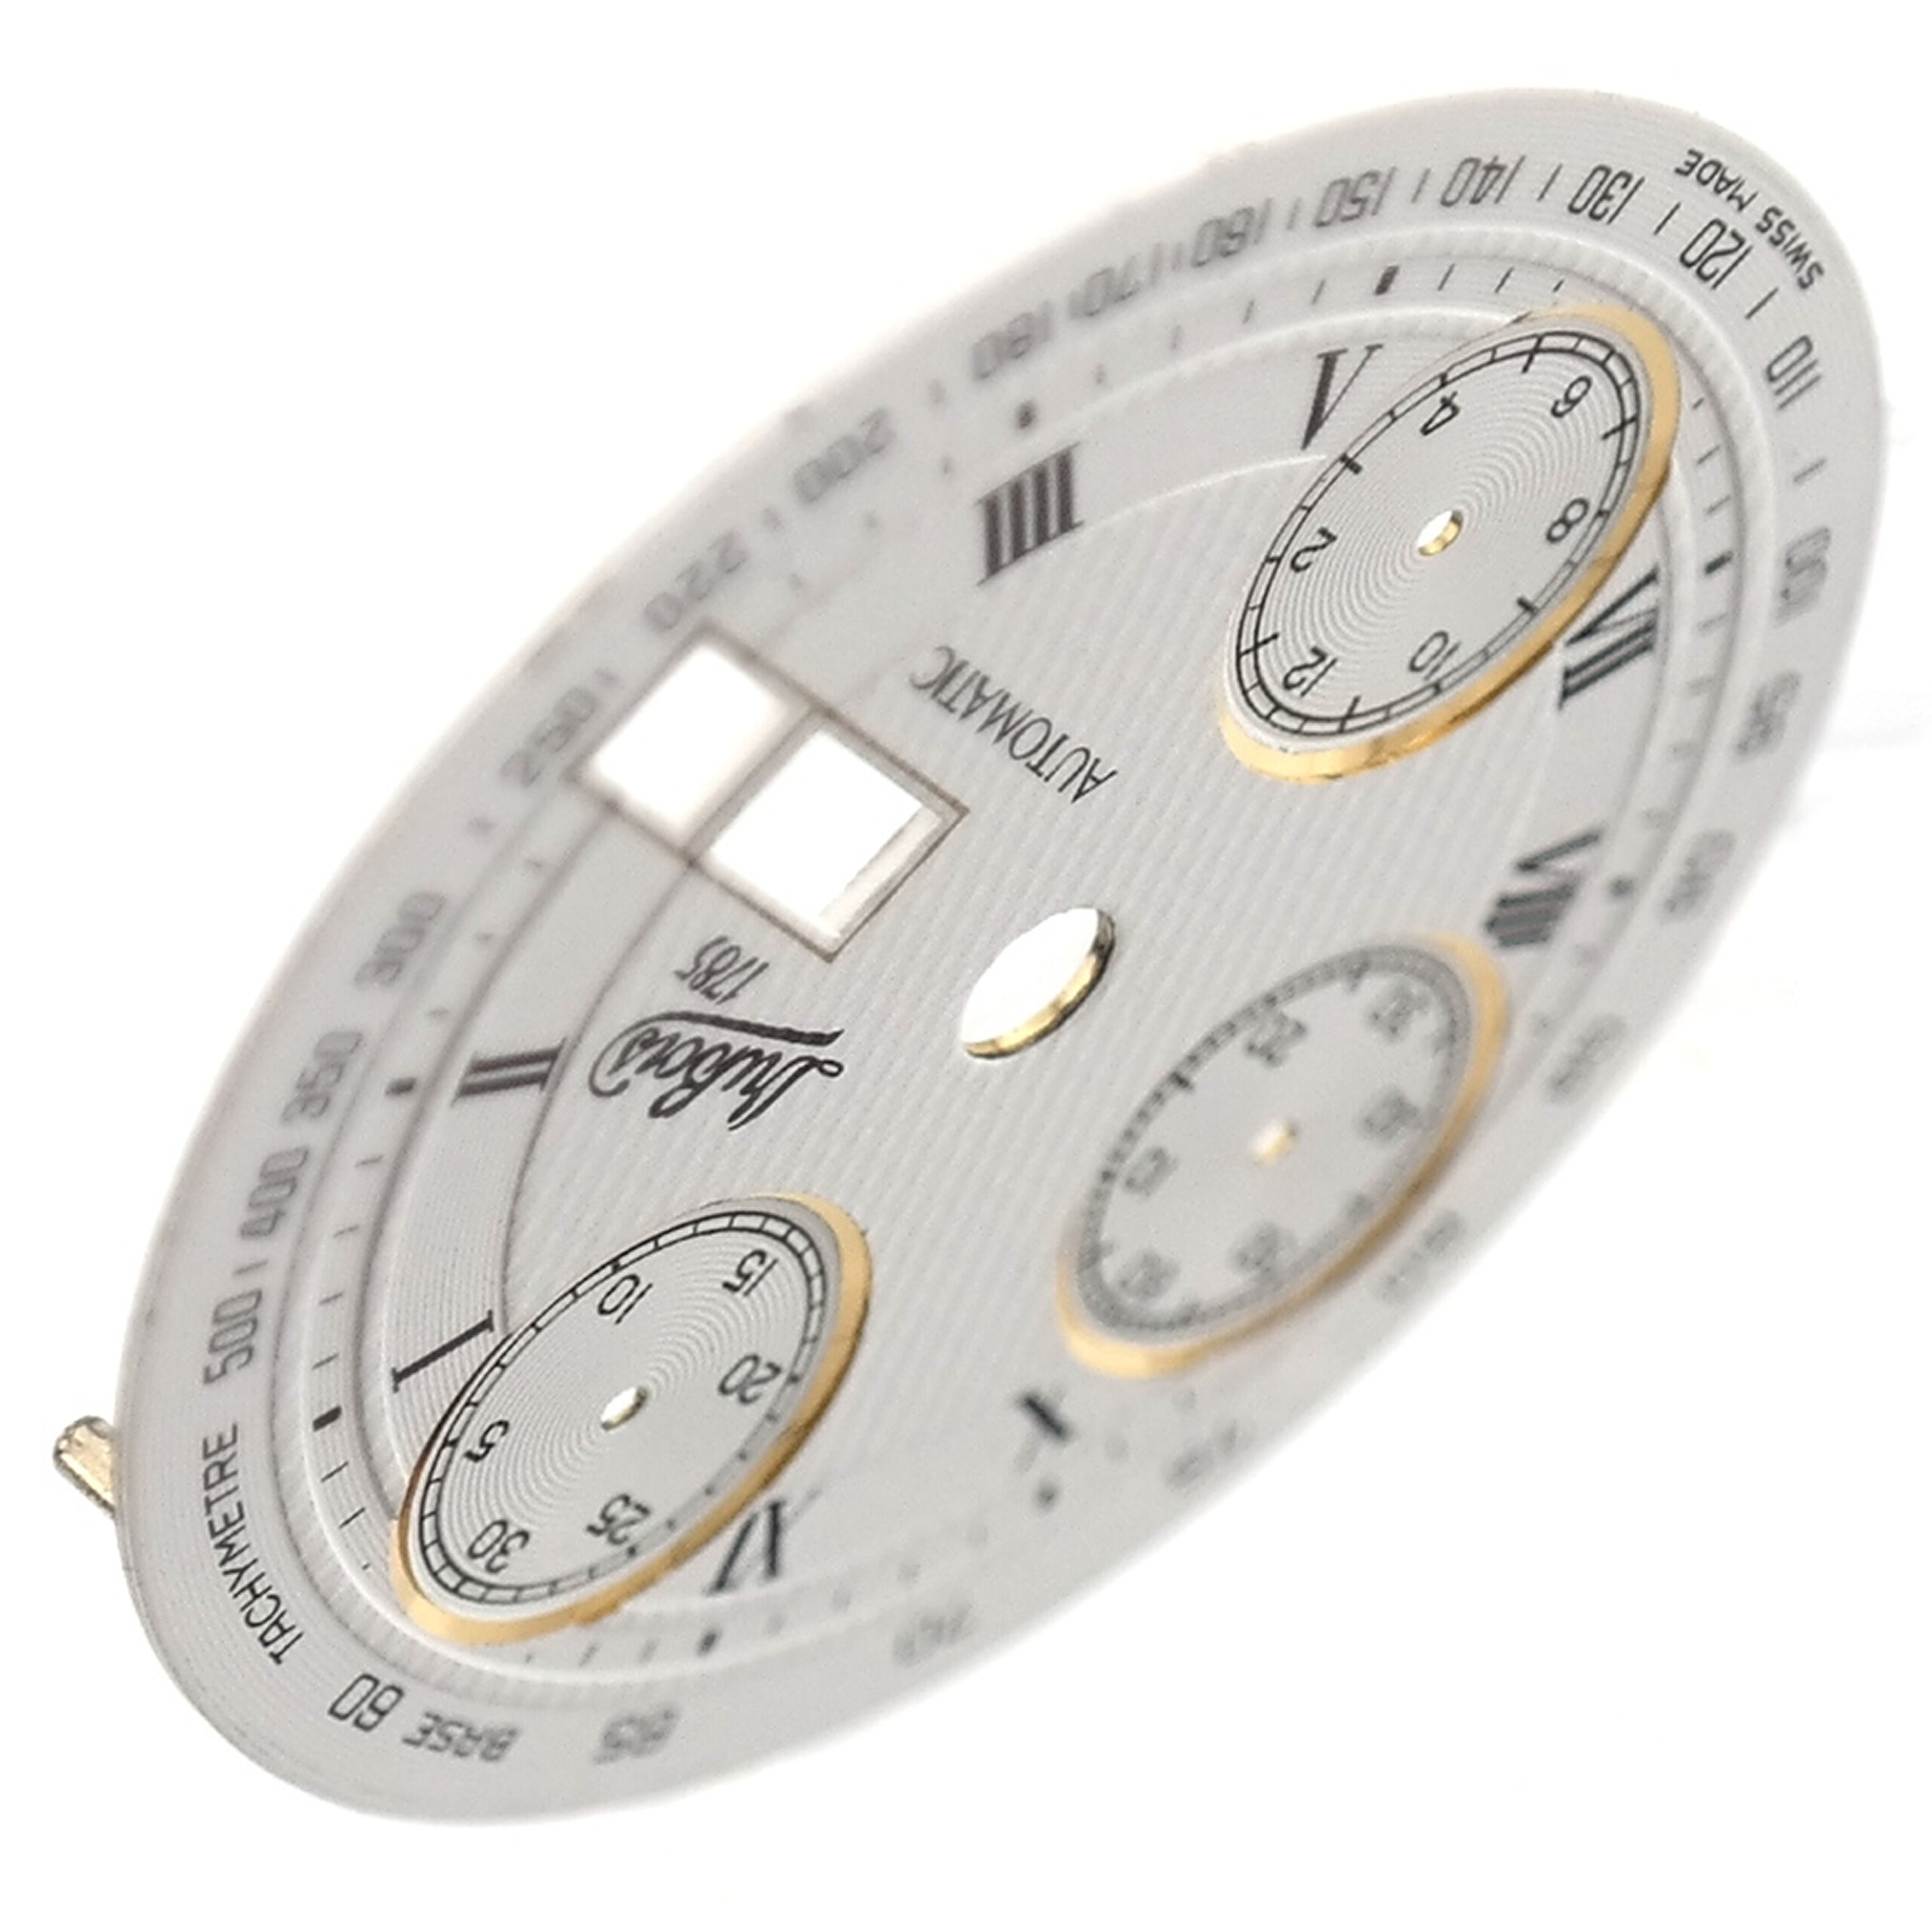 DuBois - Automatic Chronograph -  Watch Dial - ETA/Valjoux 7750 - 29.5 mm